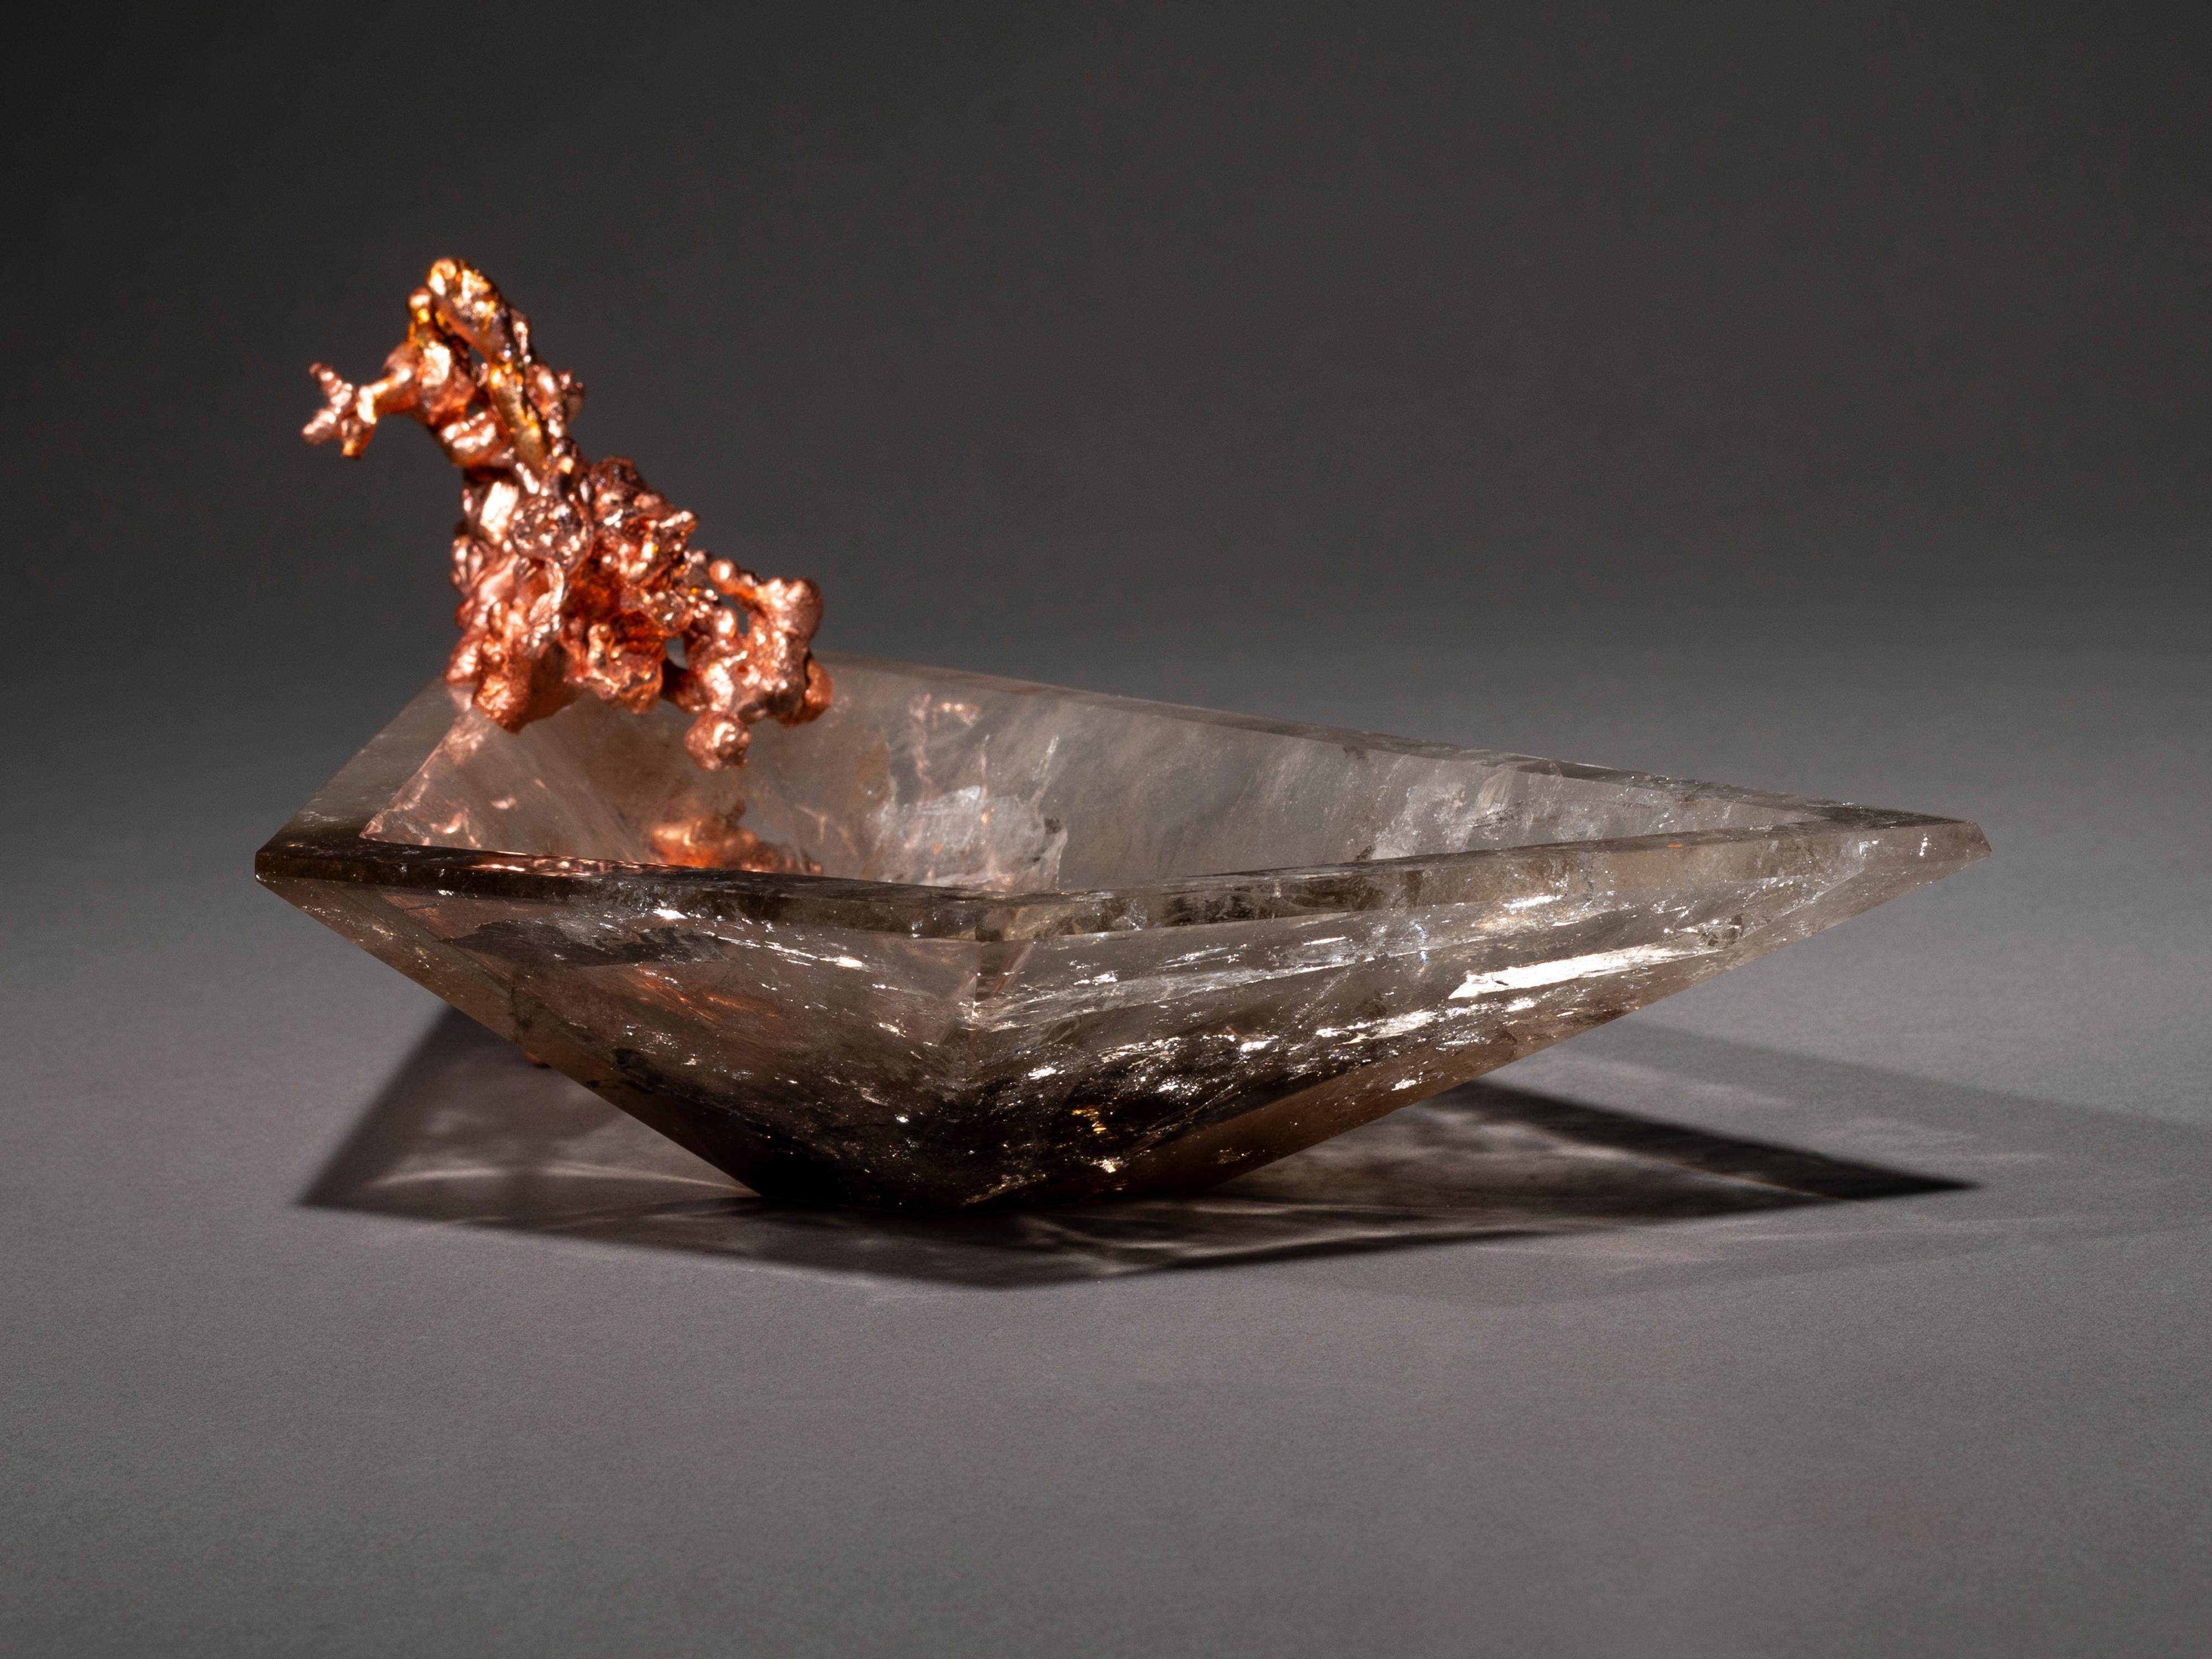 American Studio Greytak Crystal Bling Bowl 37, Copper on Smokey Quartz For Sale